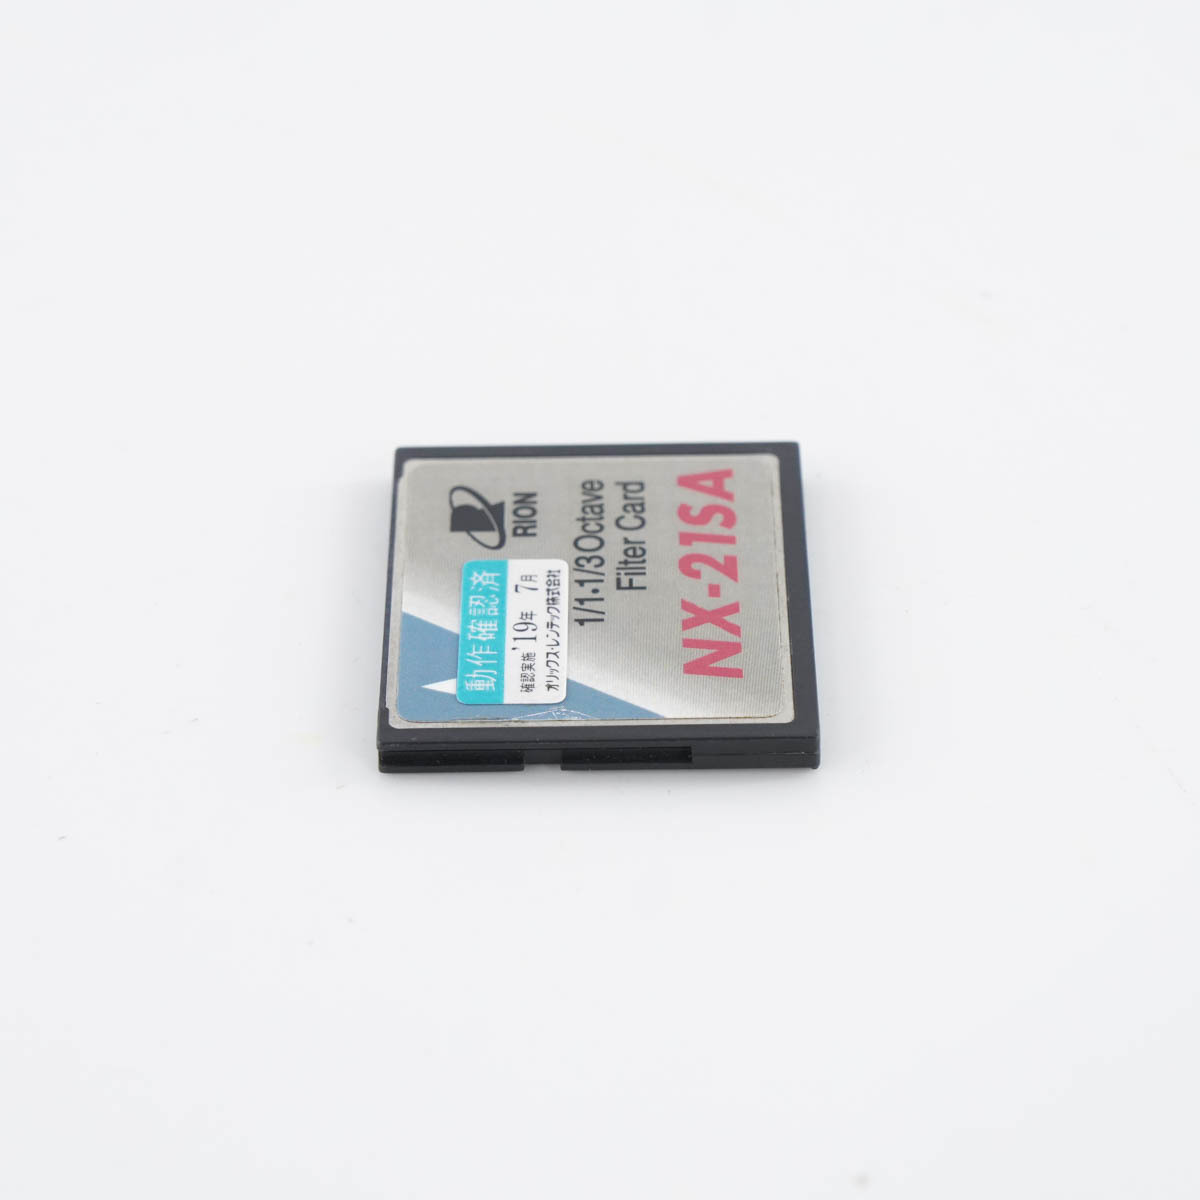 [DW] 8日保証 NX-21SA RION リオン 1/1 1/3 Octave Filter Card オクターブフィルタカード[05433-0038]_画像8